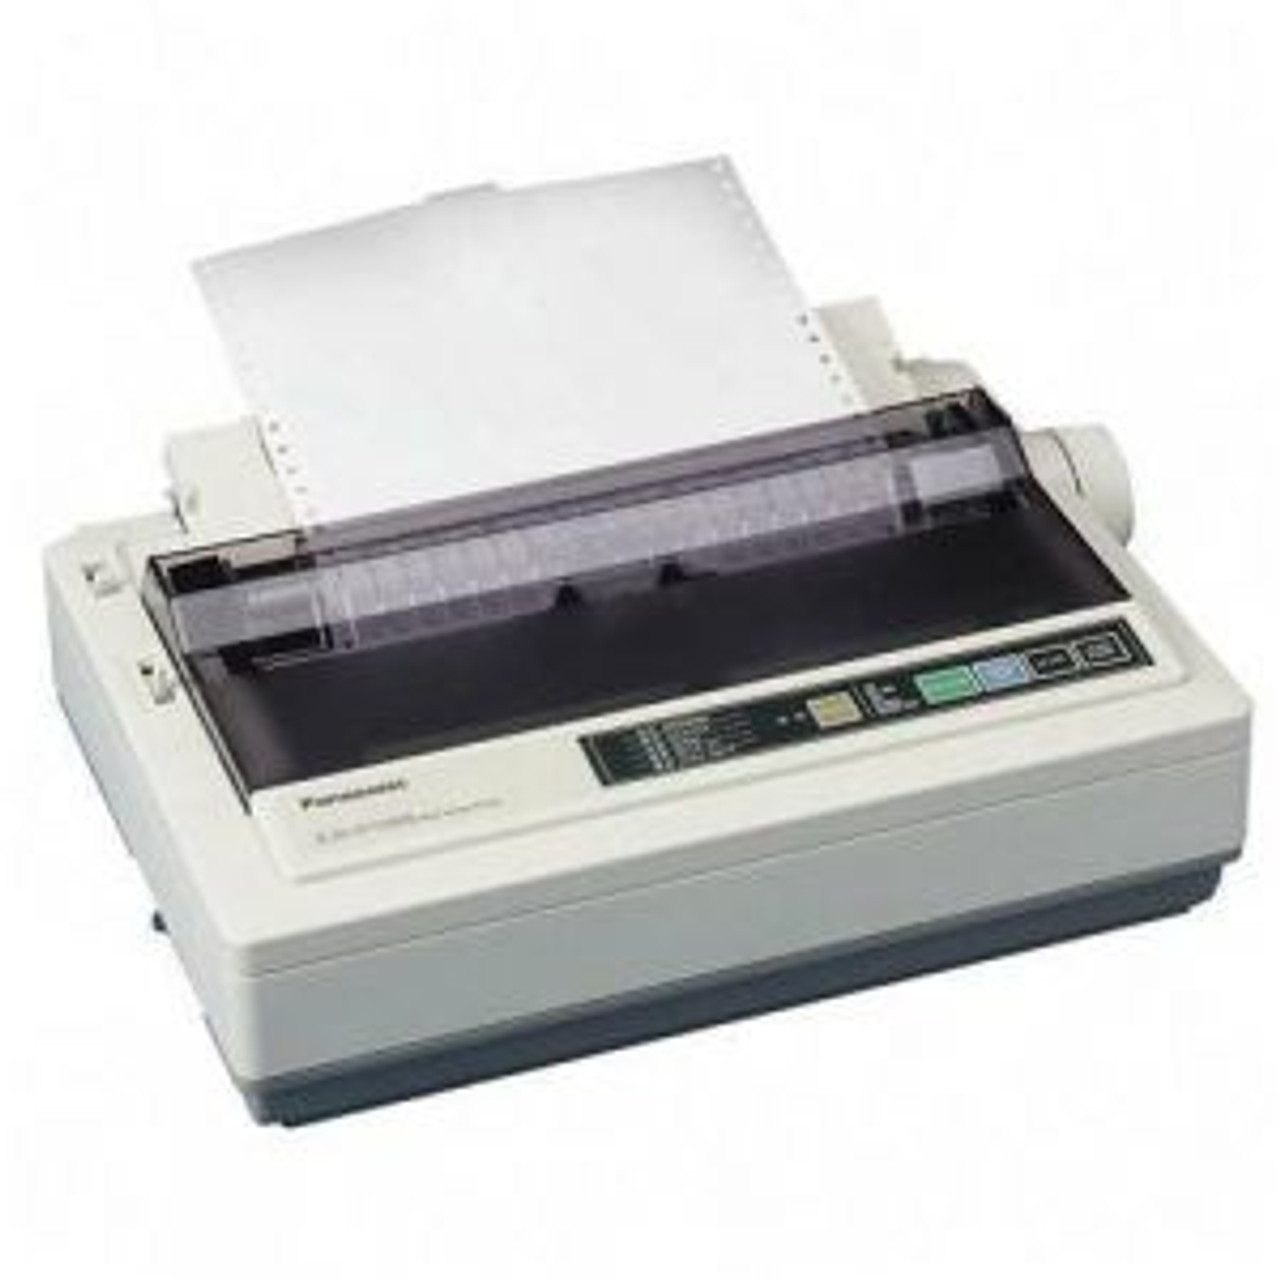 Printers & Cartridges,Printer,Dot Matrix Printers,Panasonic,KXP1150